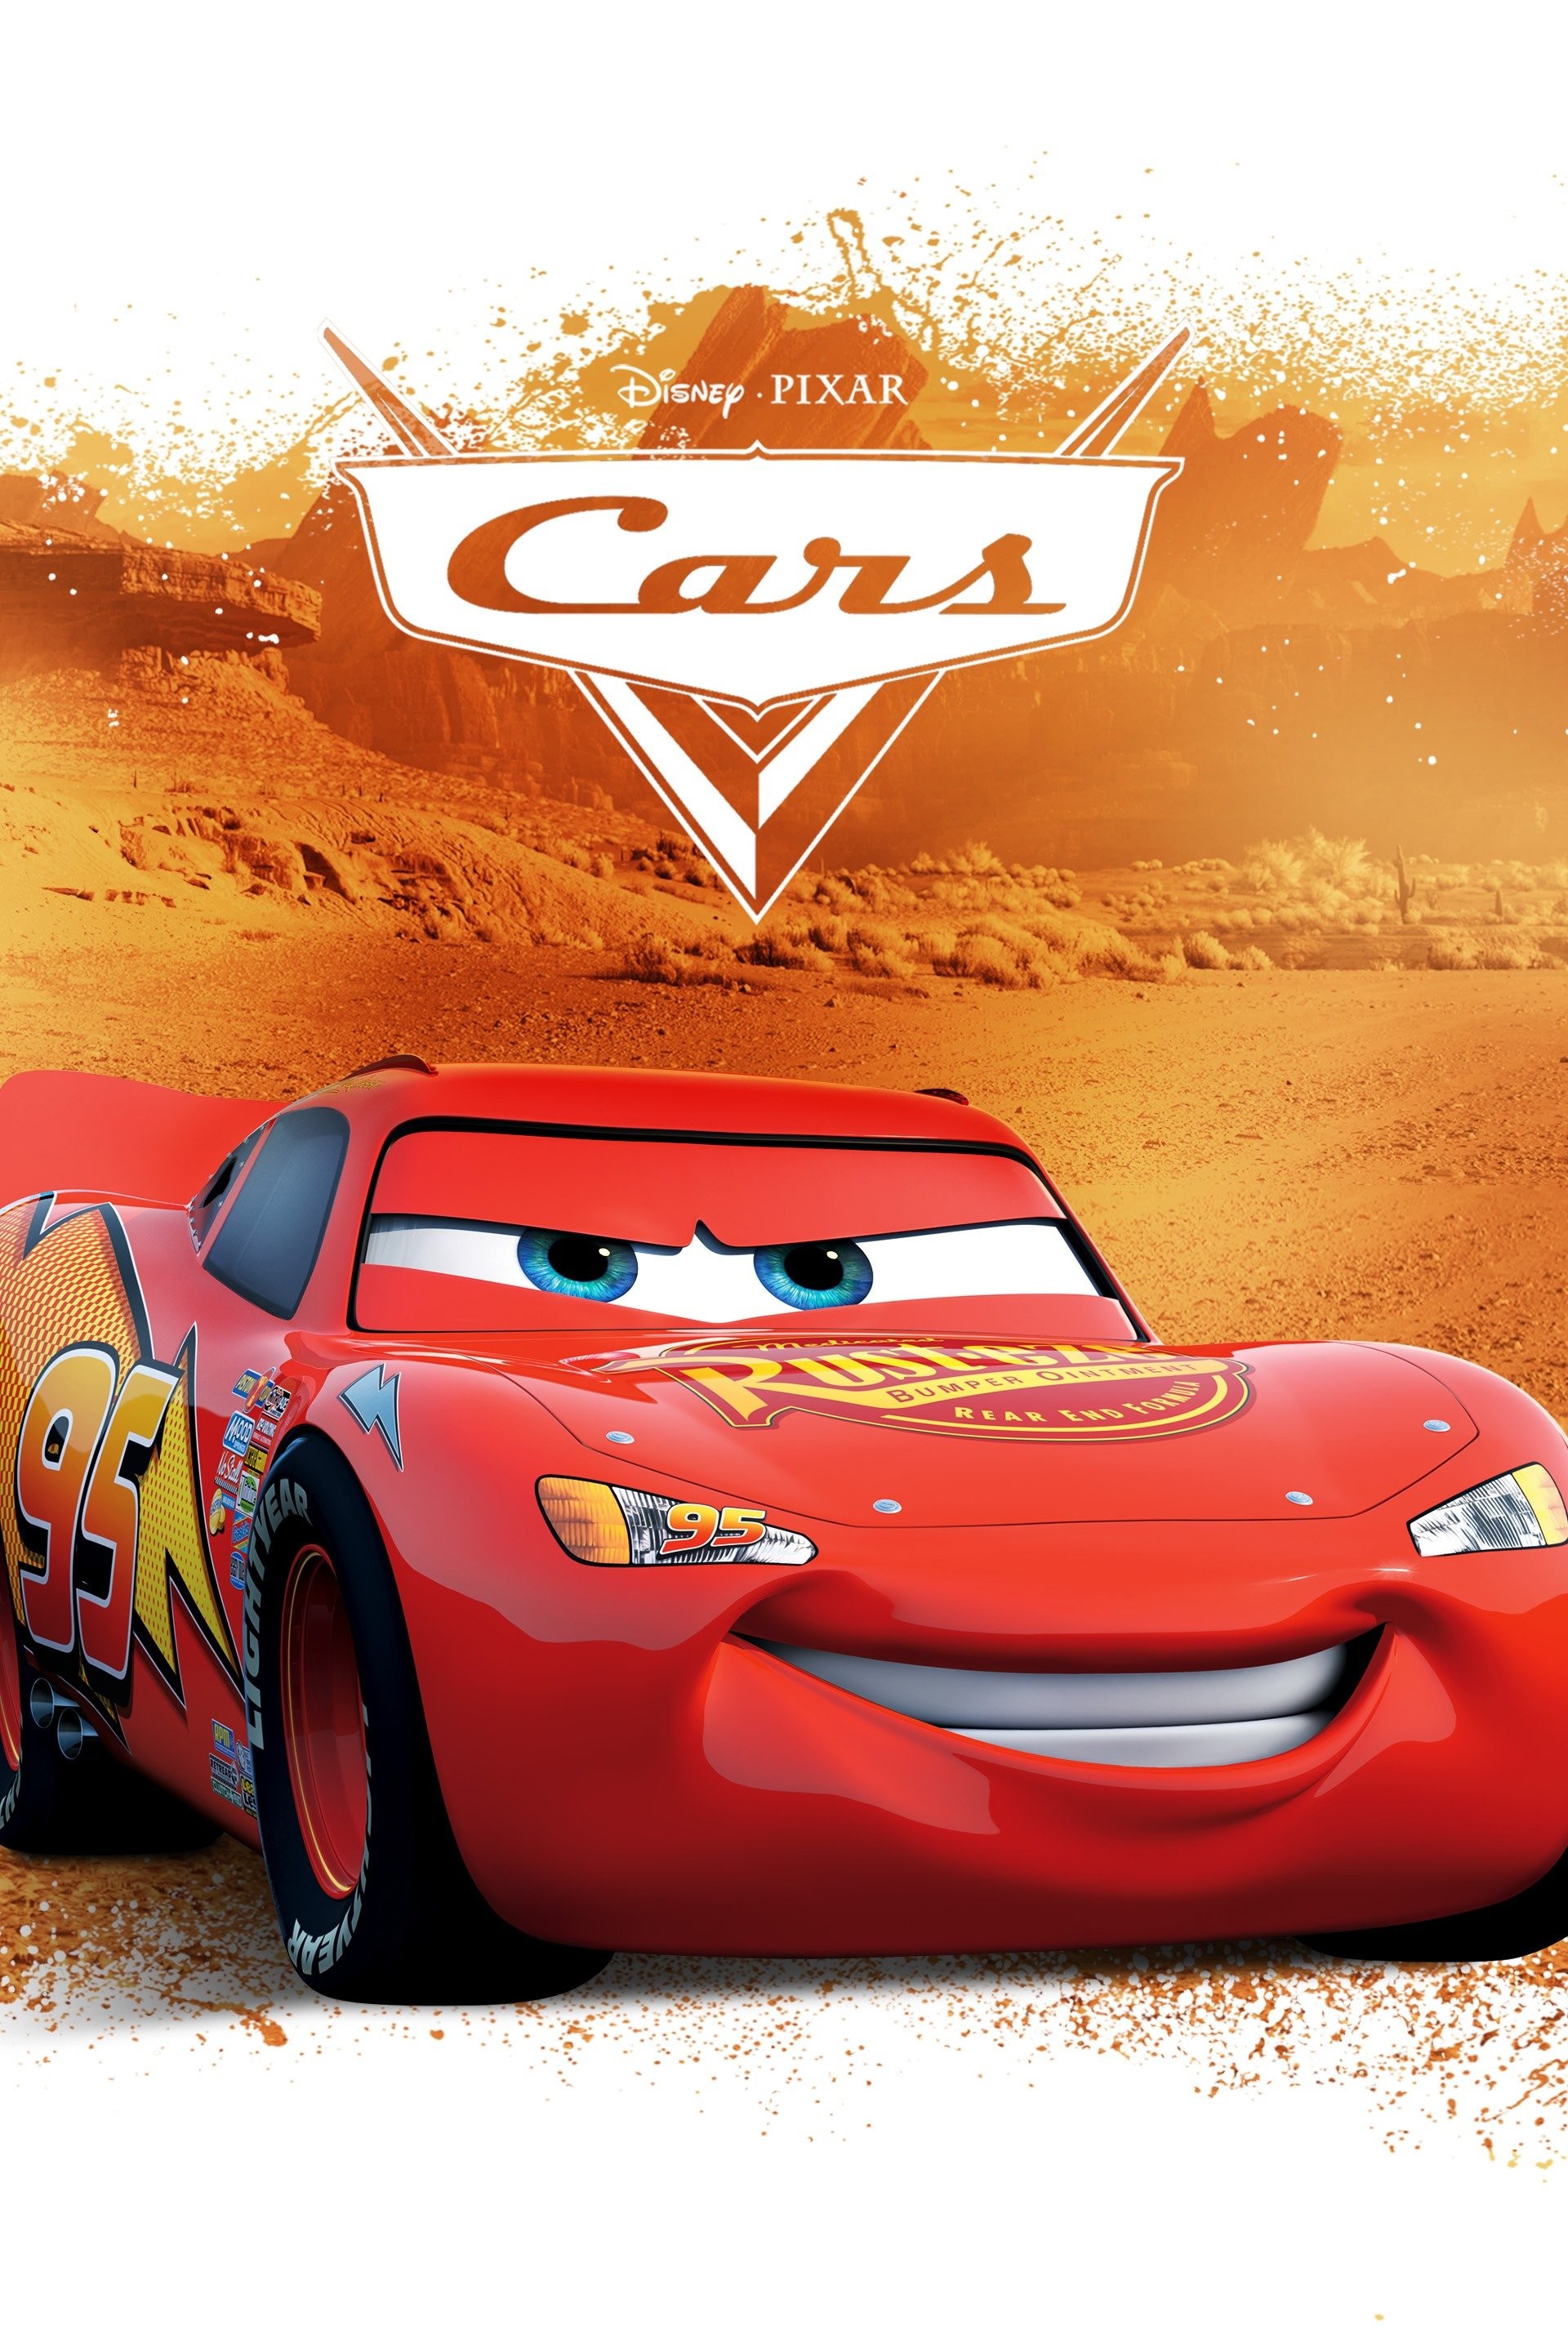 Cars (Video Game 2006) - IMDb